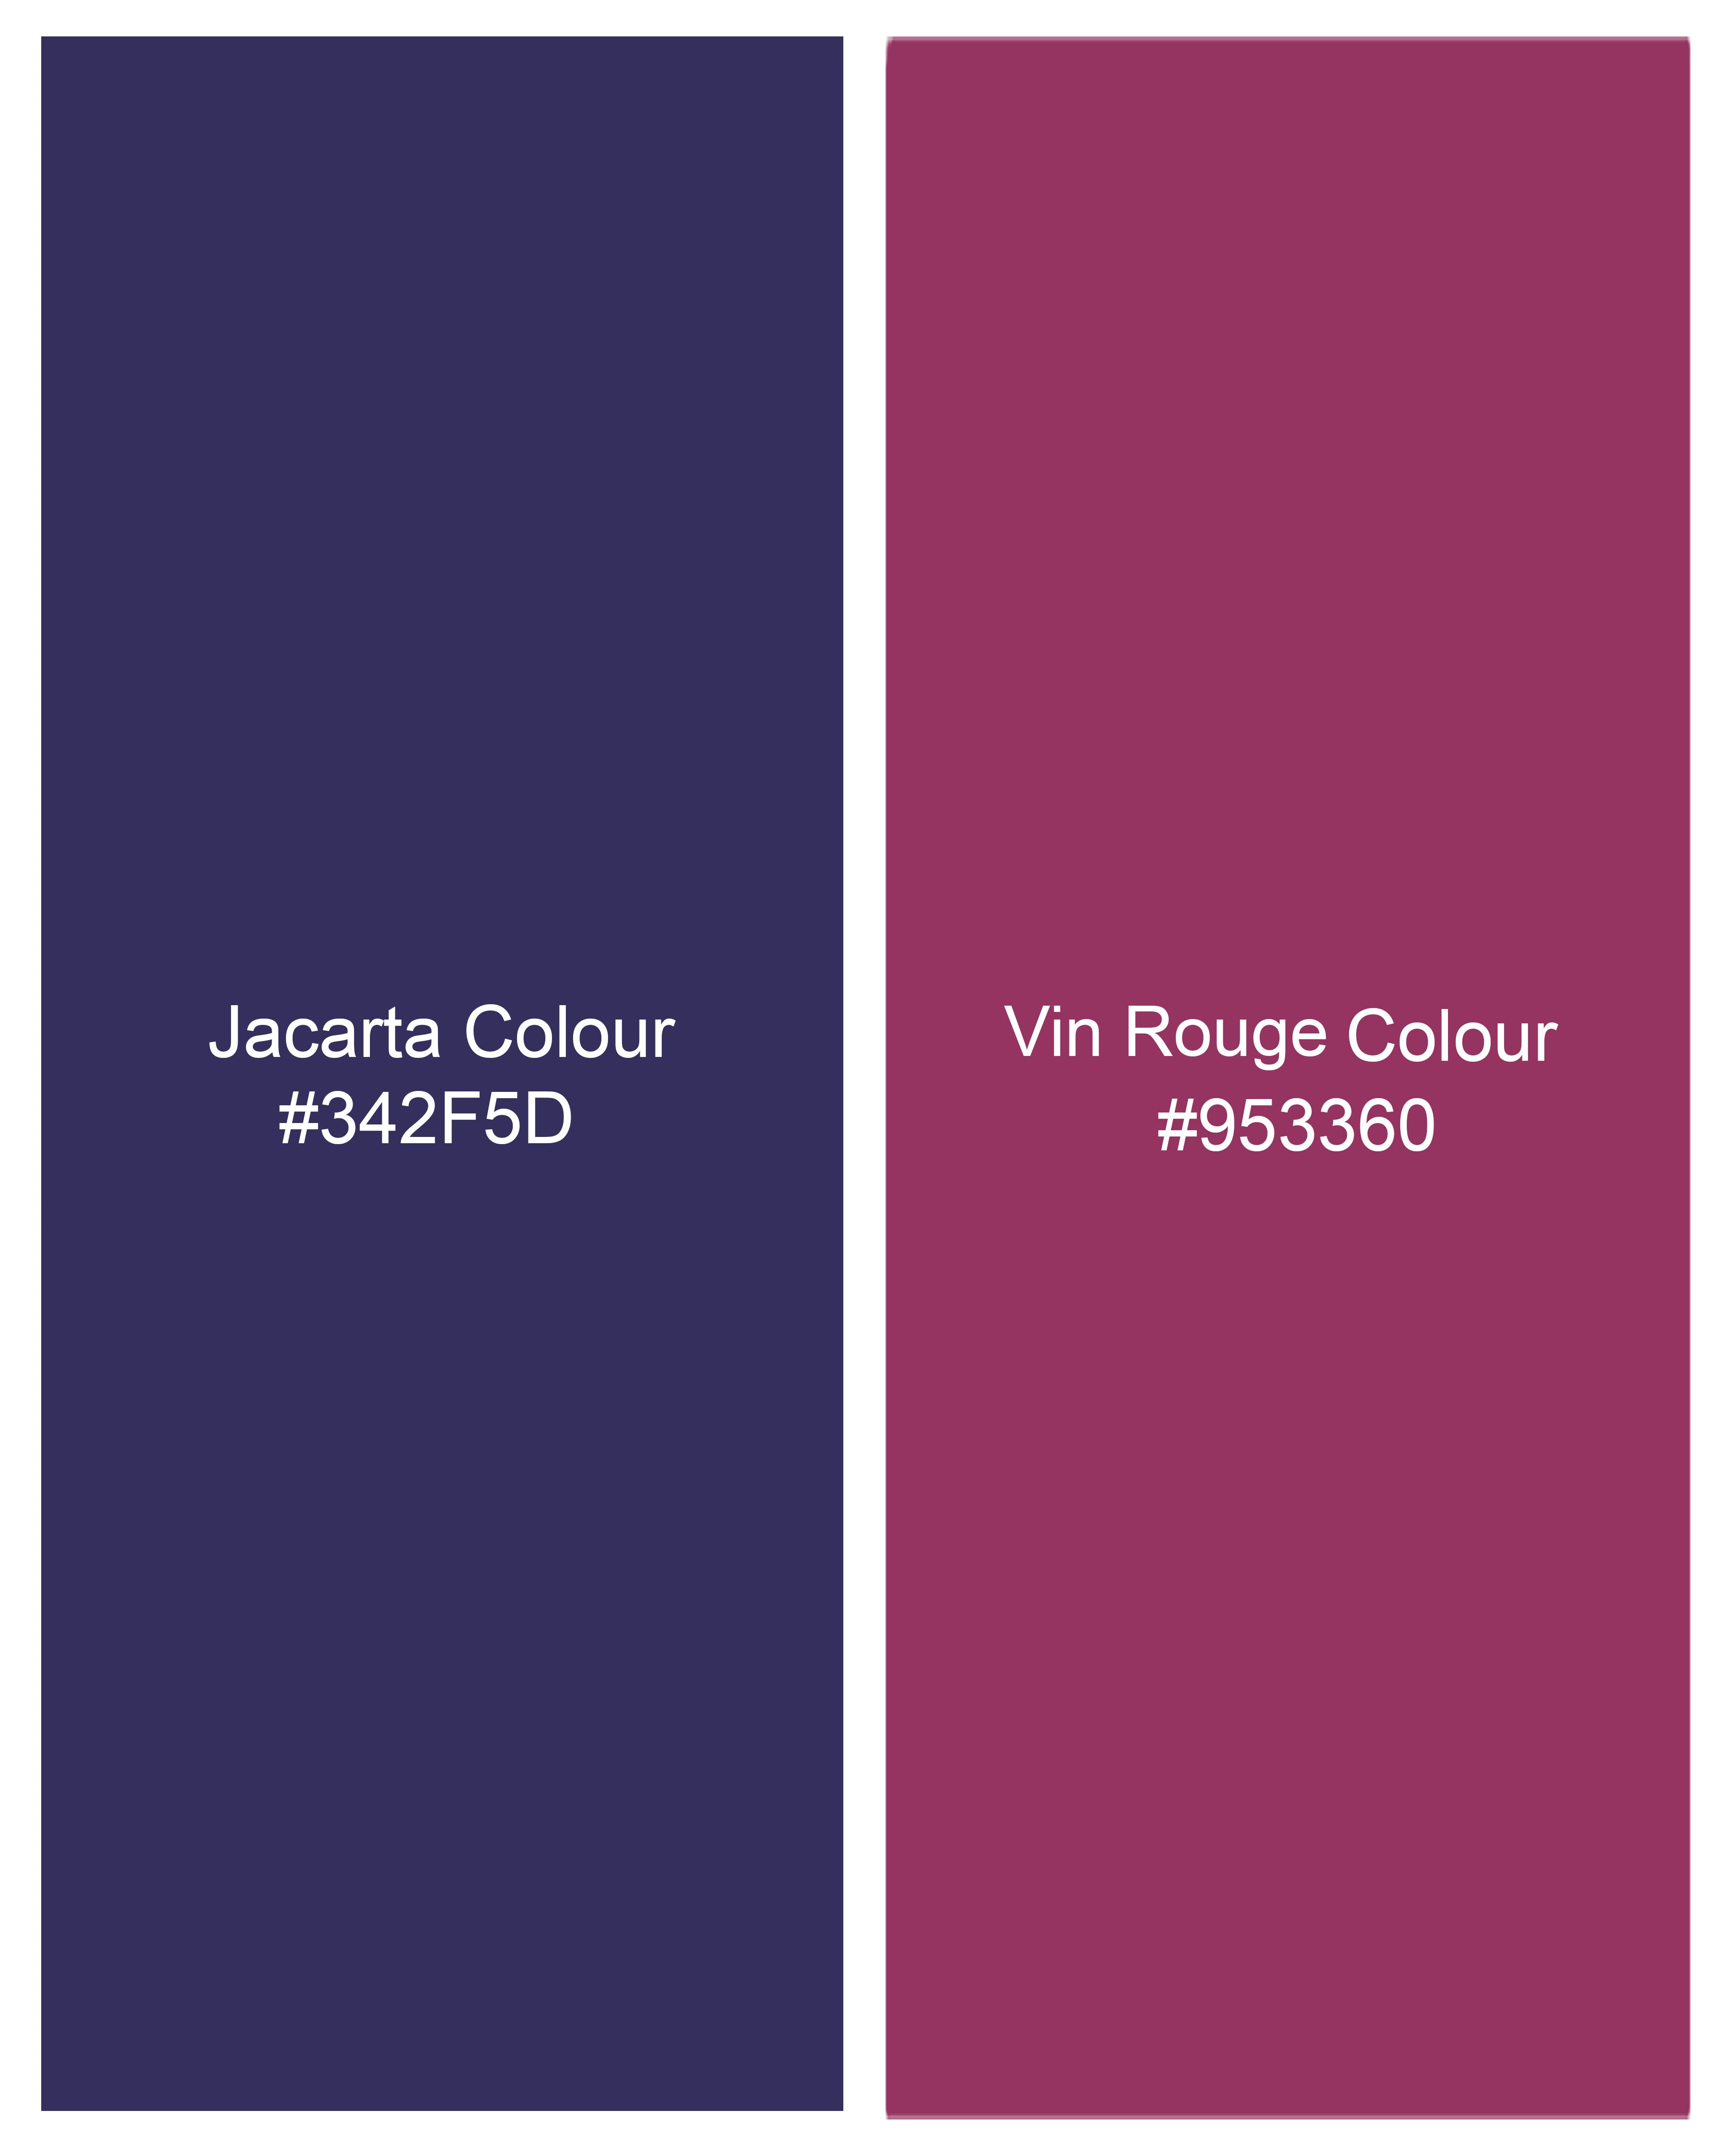 Jacarta Navy Blue with Vin Rouge Pink Striped Dobby Textured Premium Giza Cotton Shirt 8606-M-MN-38,8606-M-MN-H-38,8606-M-MN-39,8606-M-MN-H-39,8606-M-MN-40,8606-M-MN-H-40,8606-M-MN-42,8606-M-MN-H-42,8606-M-MN-44,8606-M-MN-H-44,8606-M-MN-46,8606-M-MN-H-46,8606-M-MN-48,8606-M-MN-H-48,8606-M-MN-50,8606-M-MN-H-50,8606-M-MN-52,8606-M-MN-H-52